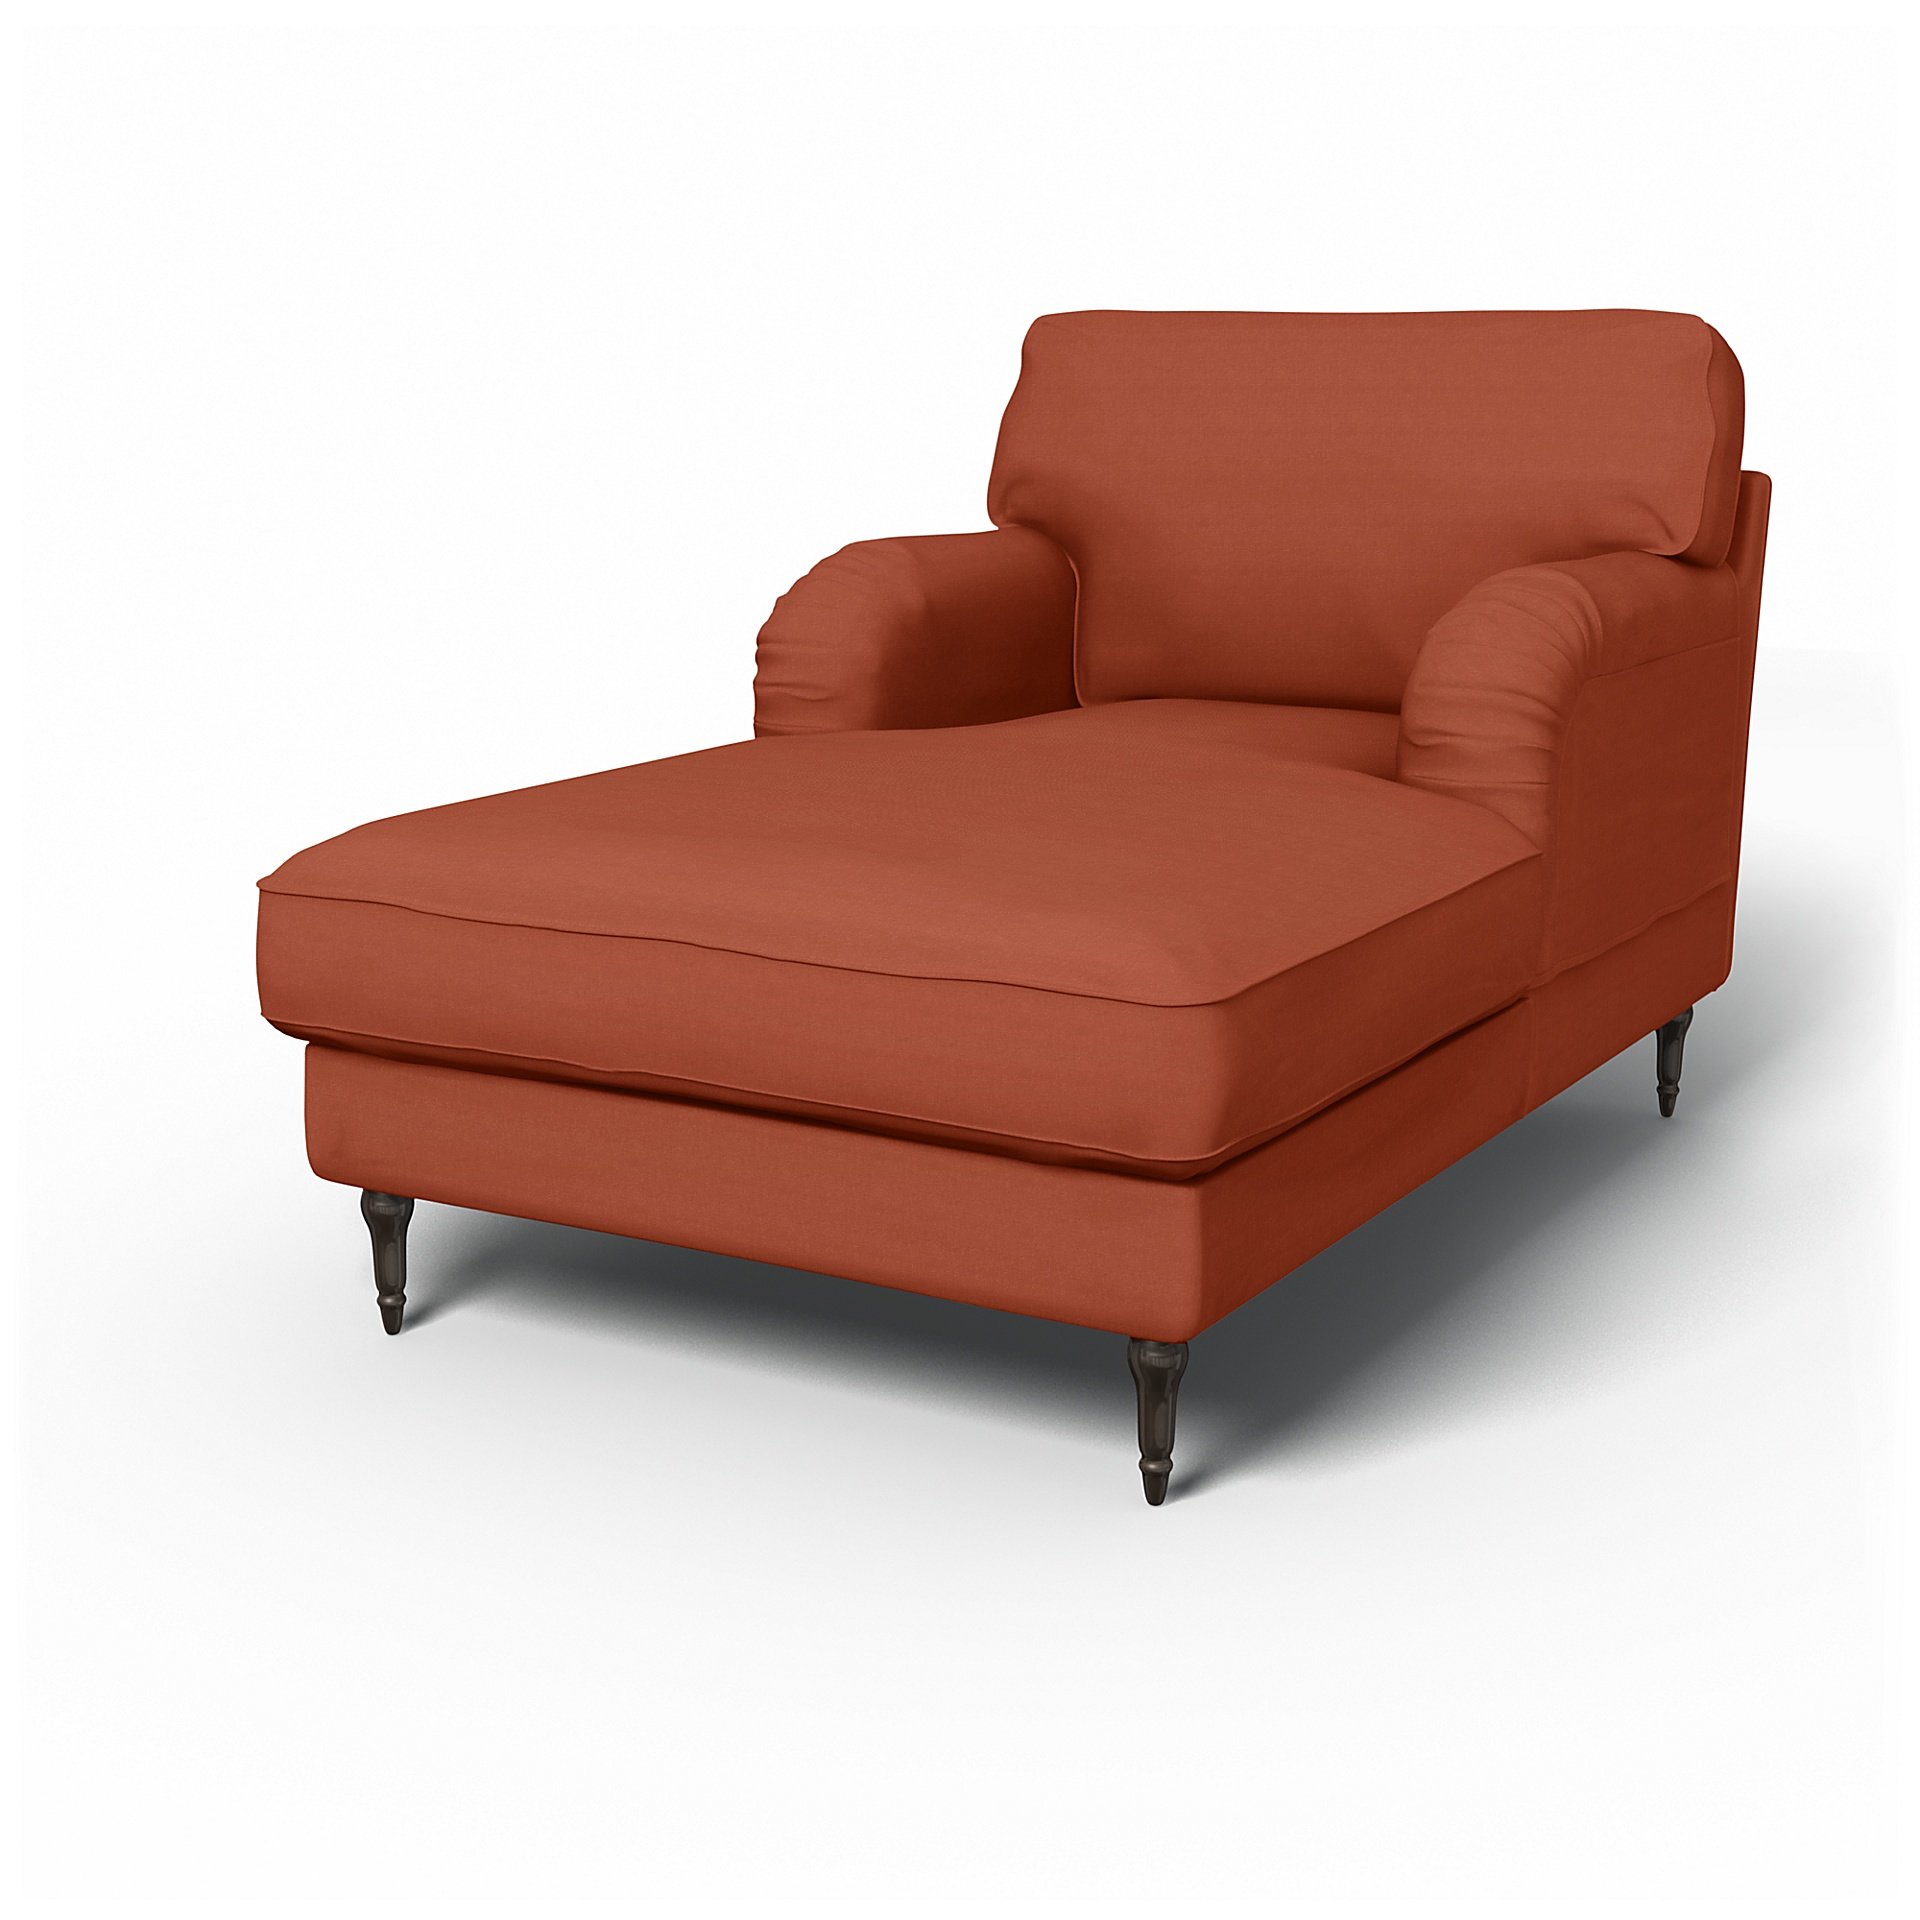 IKEA - Stocksund Chaise Longue Cover, Burnt Orange, Linen - Bemz